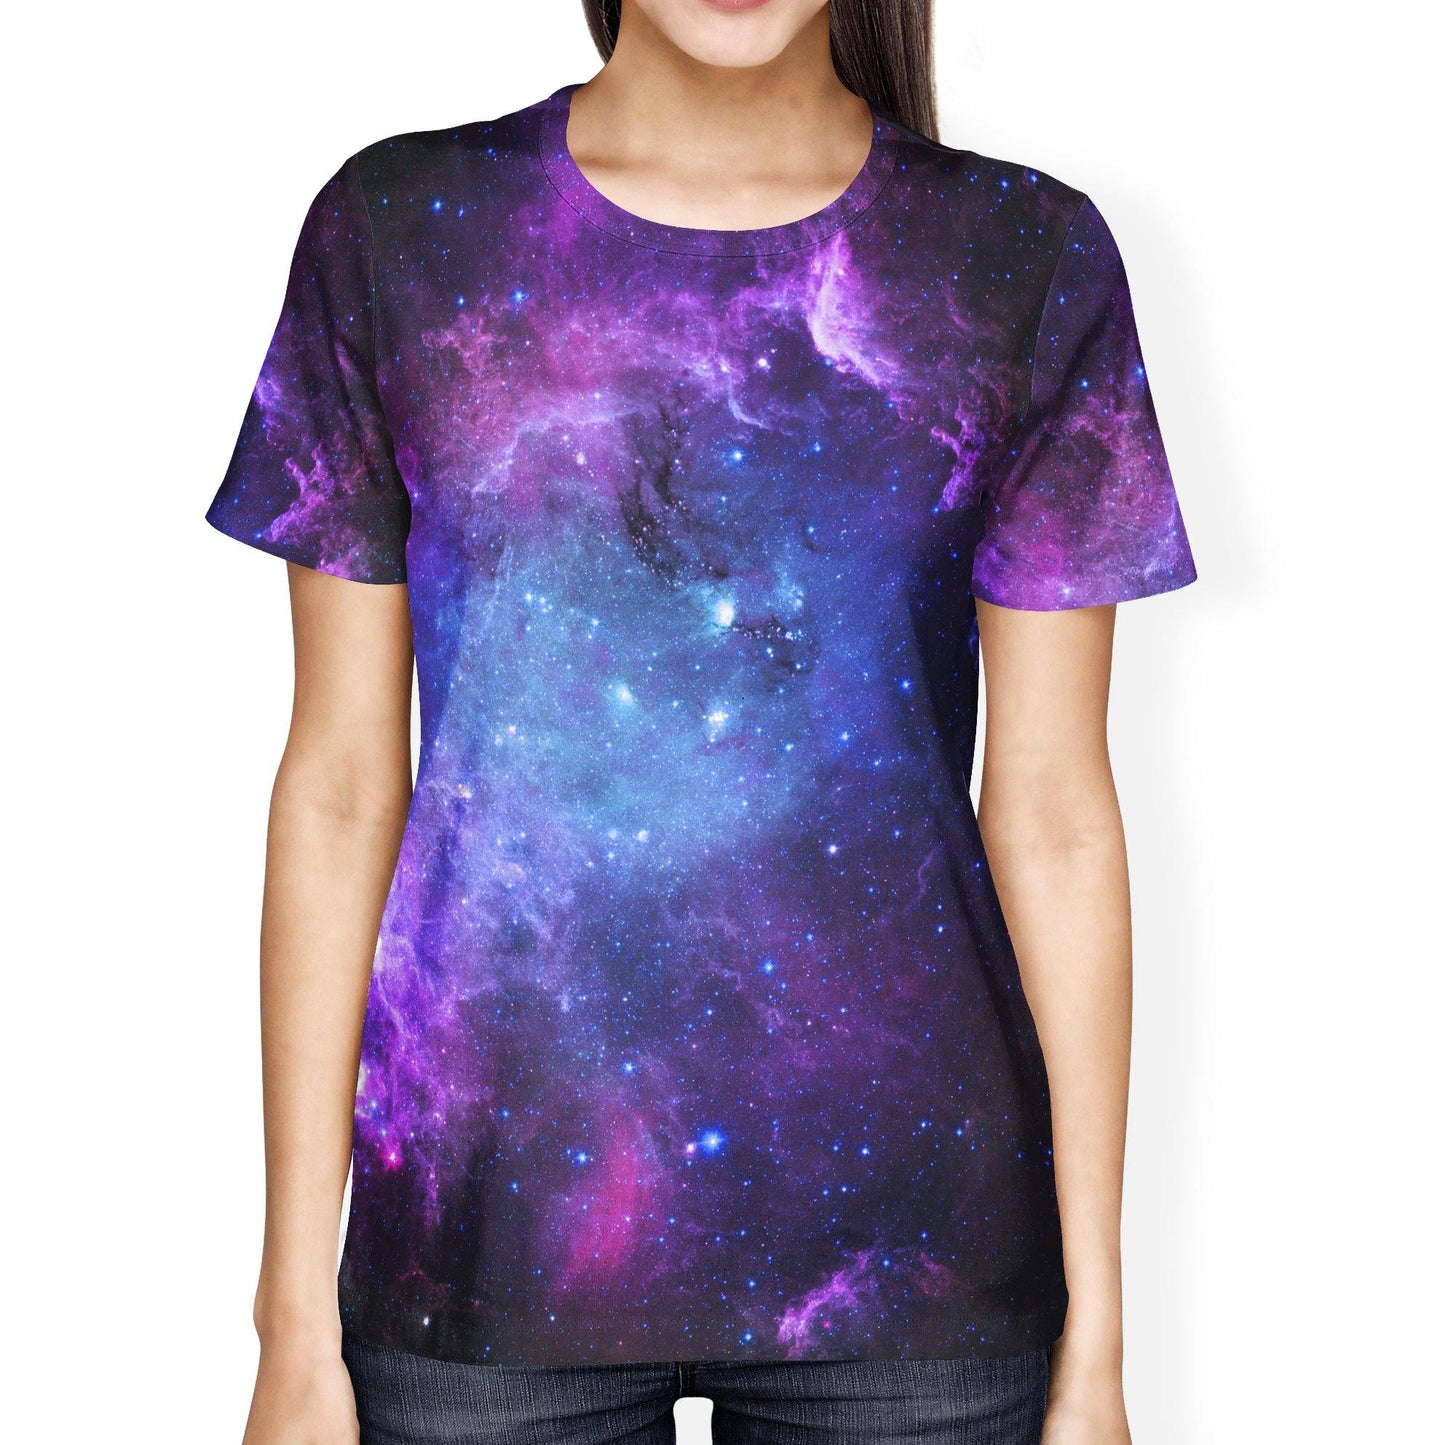 Blue Galaxy Ladie's T-shirt - USA Made Dropship